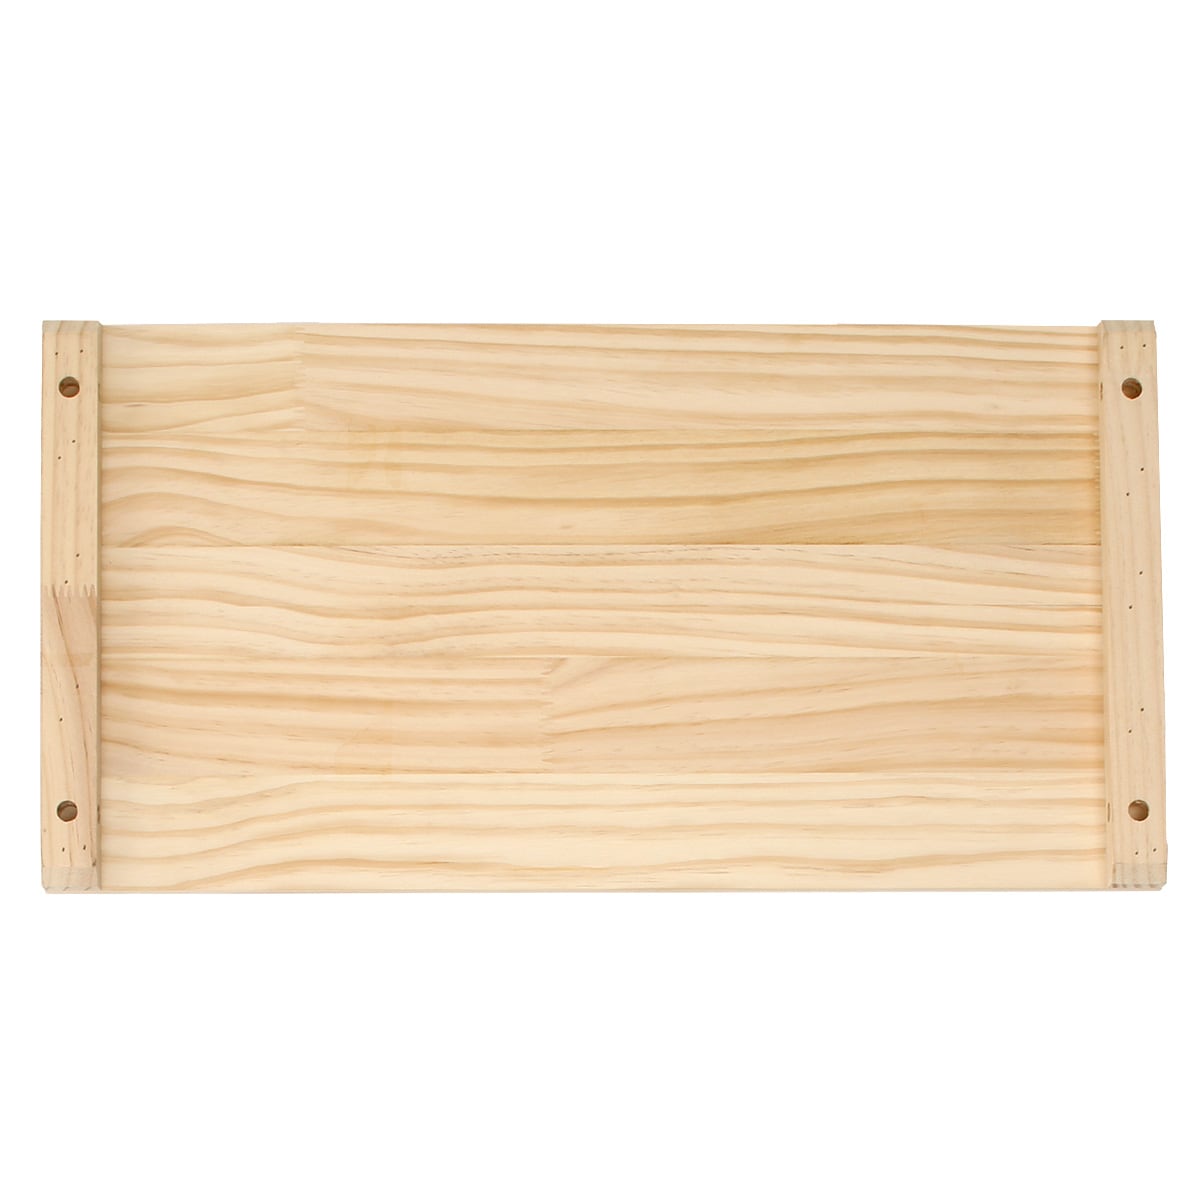 ( width 61.5cm for ) addition shelves board man ks6230 wooden bookcase rack storage nitoli